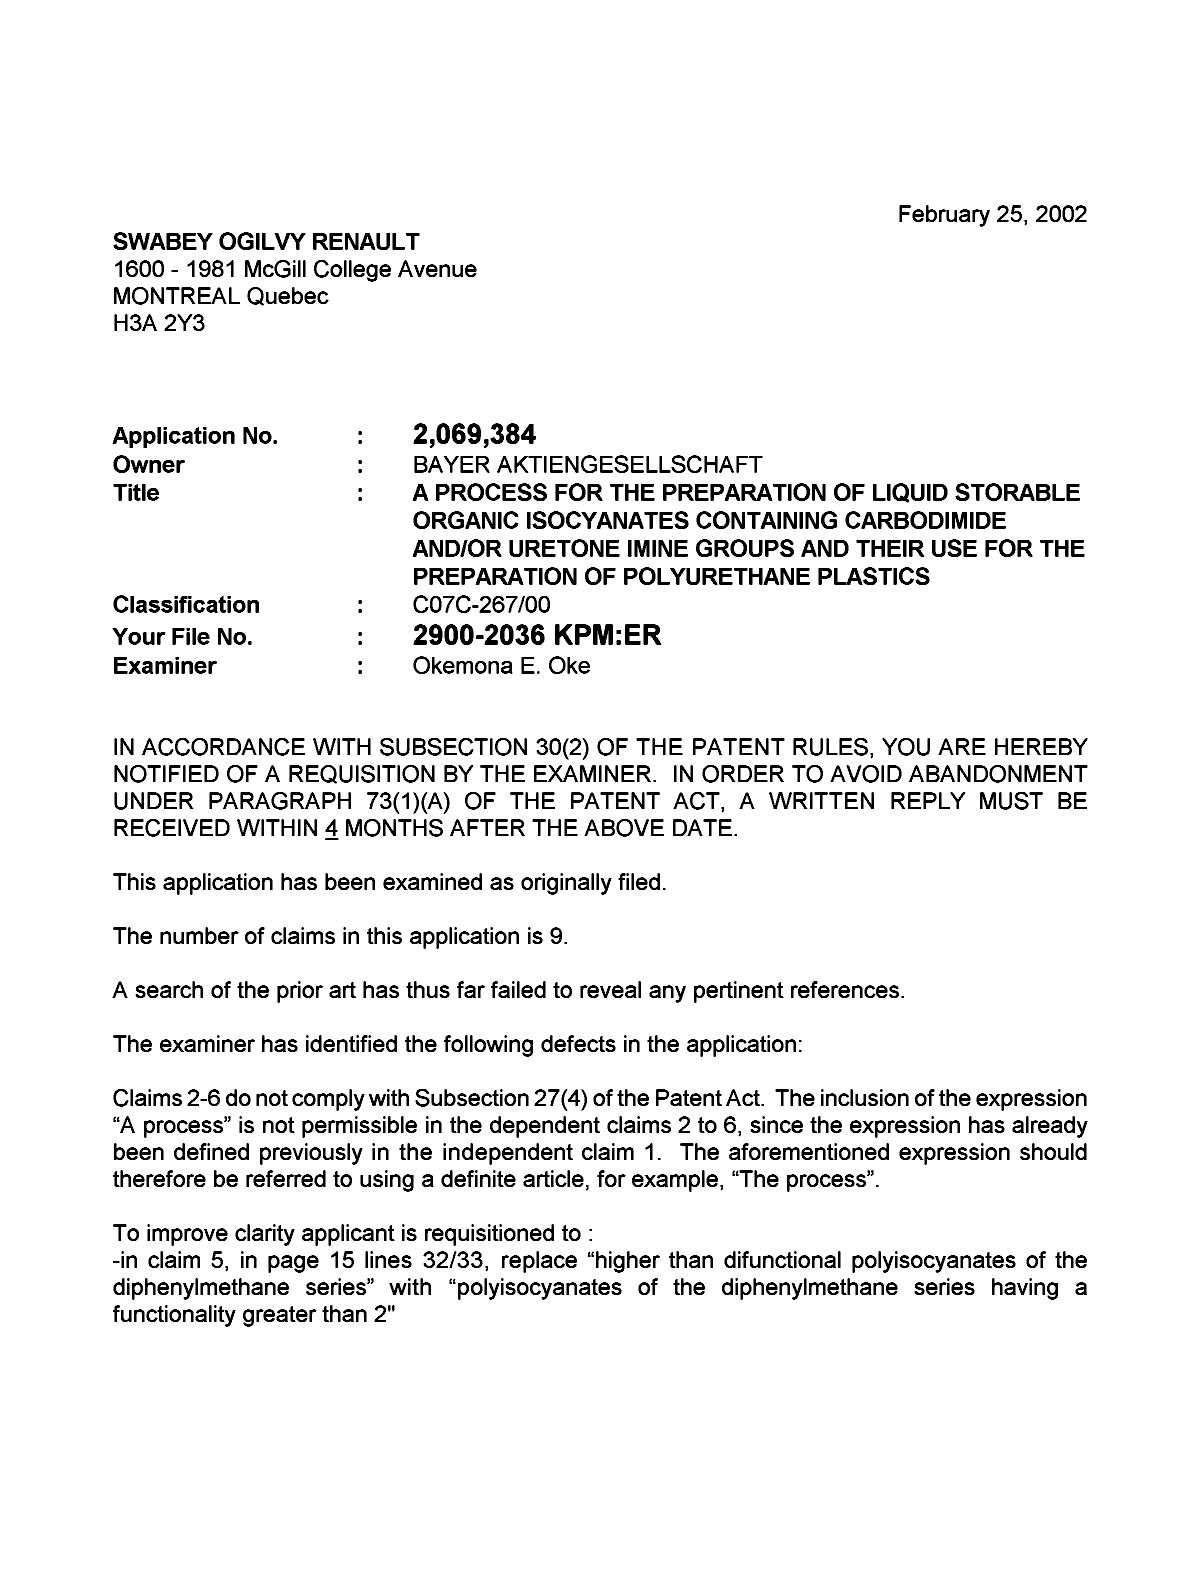 Canadian Patent Document 2069384. Prosecution-Amendment 20020225. Image 1 of 2